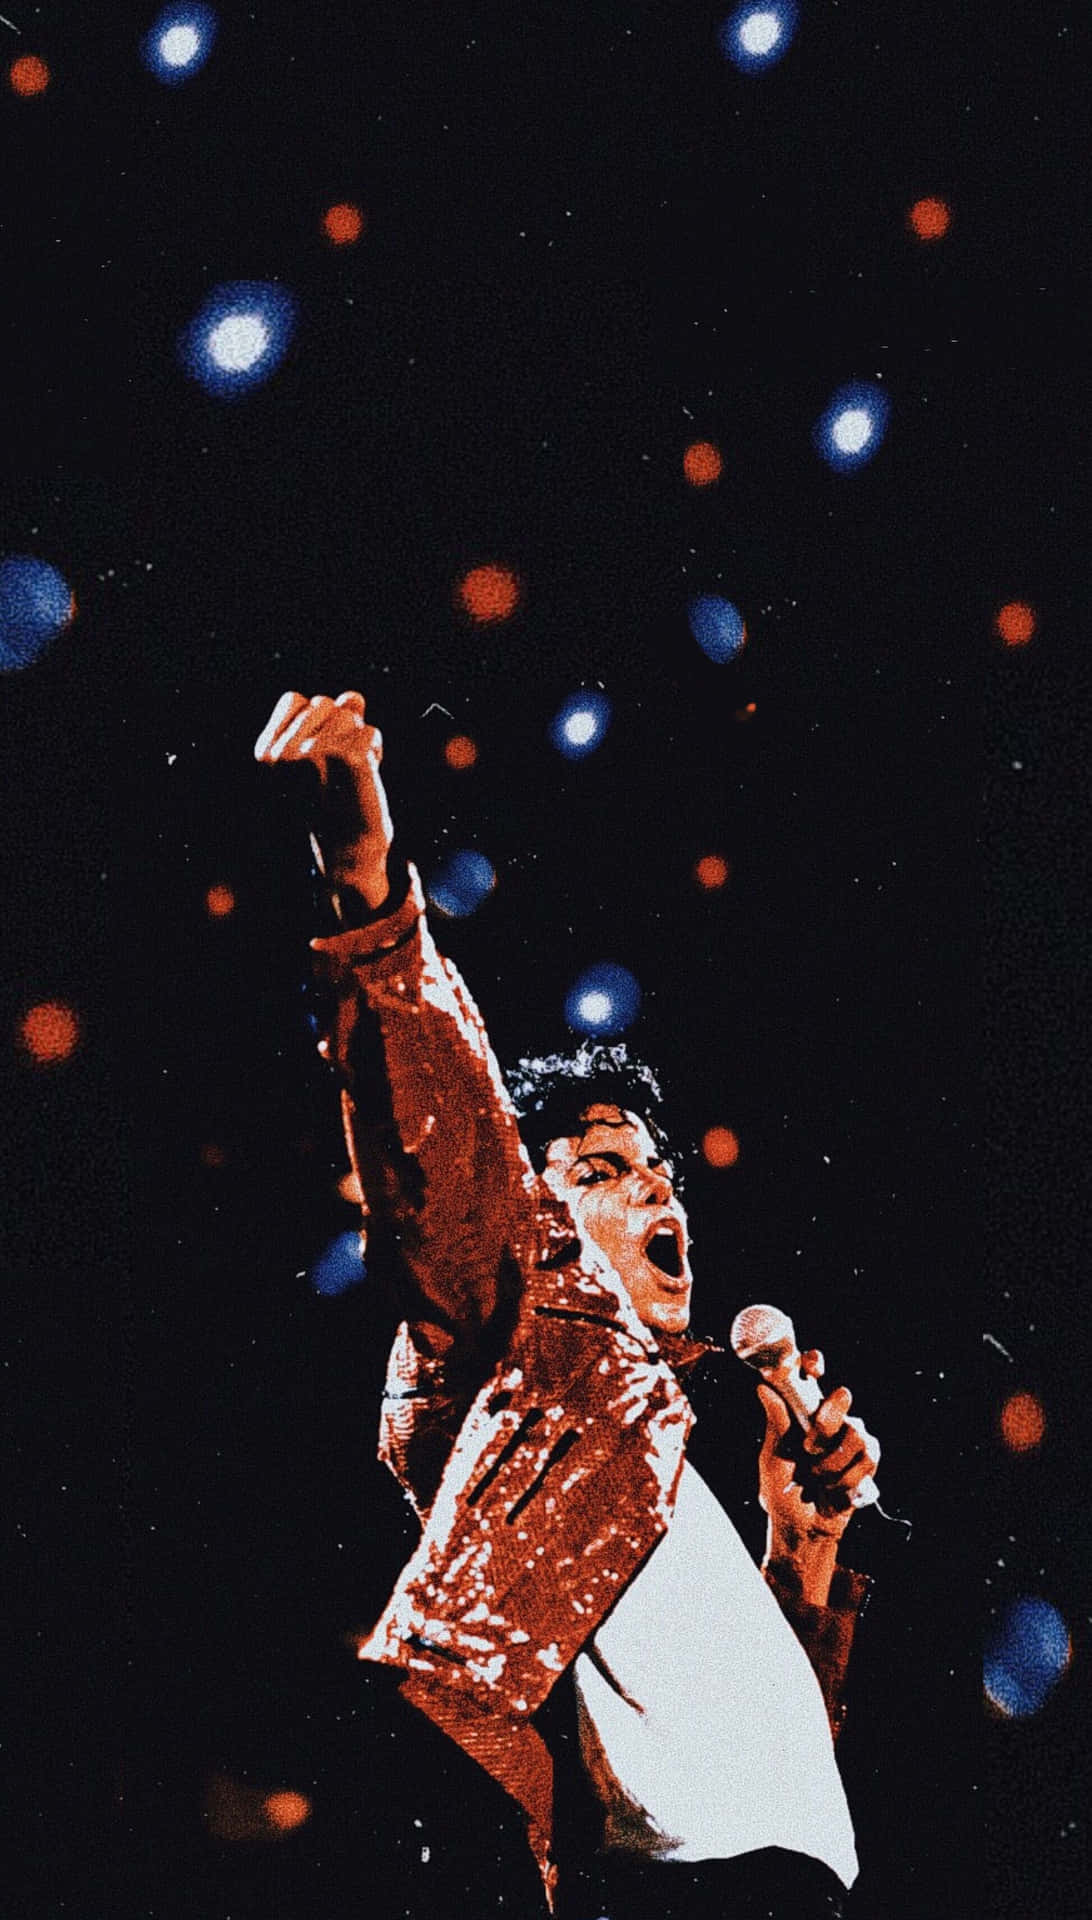 Free Michael Jackson iPhone Wallpaper Downloads, Michael Jackson iPhone Wallpaper for FREE